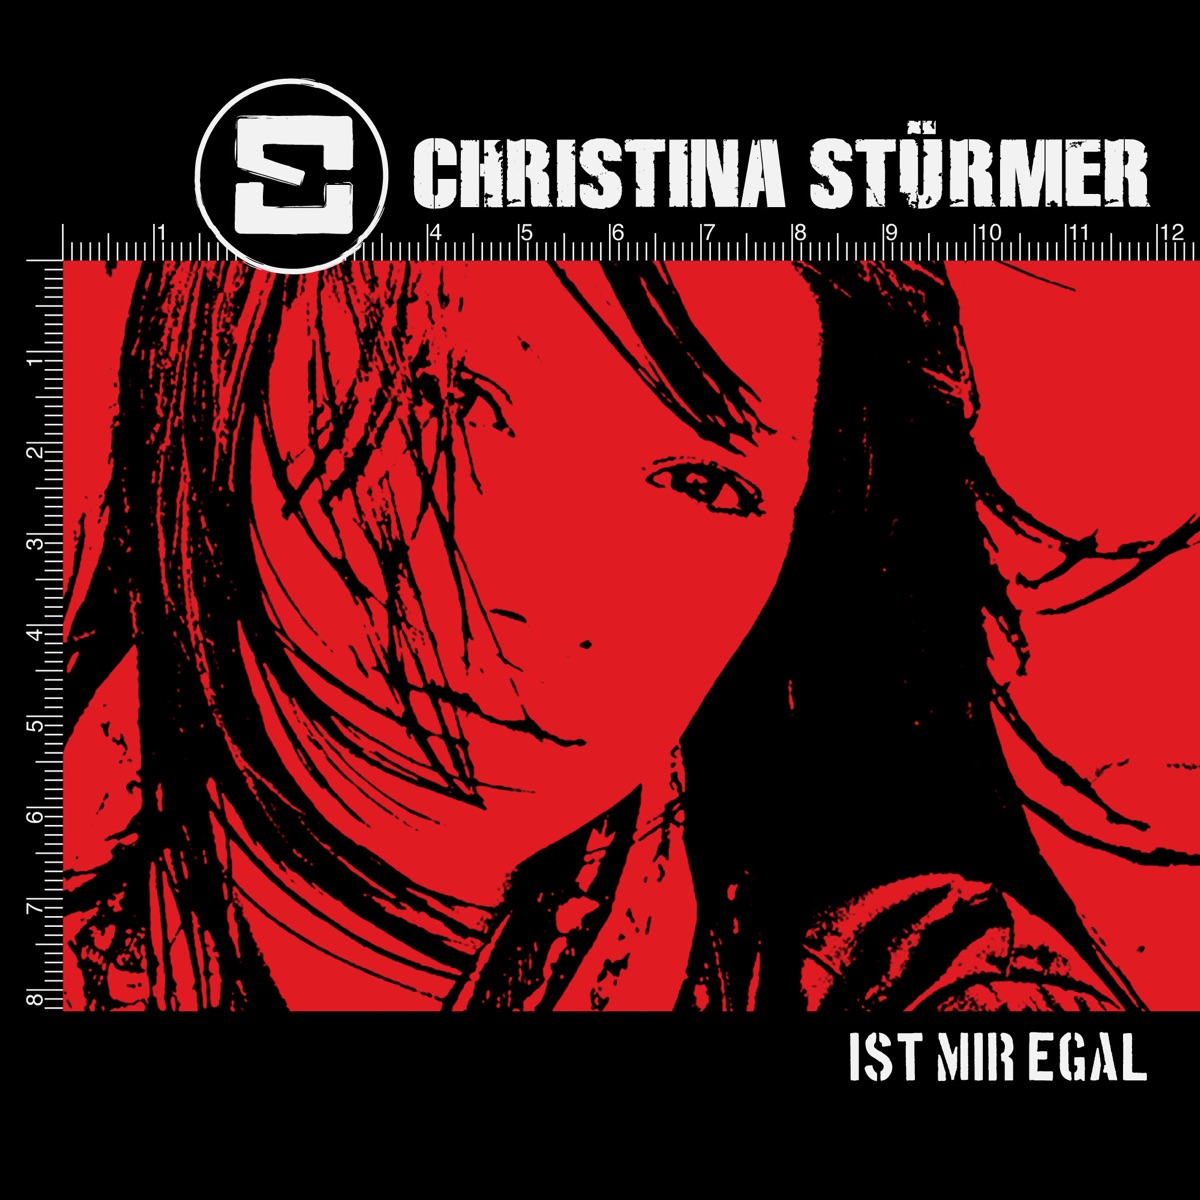 Mehr als perfekt - EP by Christina Stürmer on Apple Music